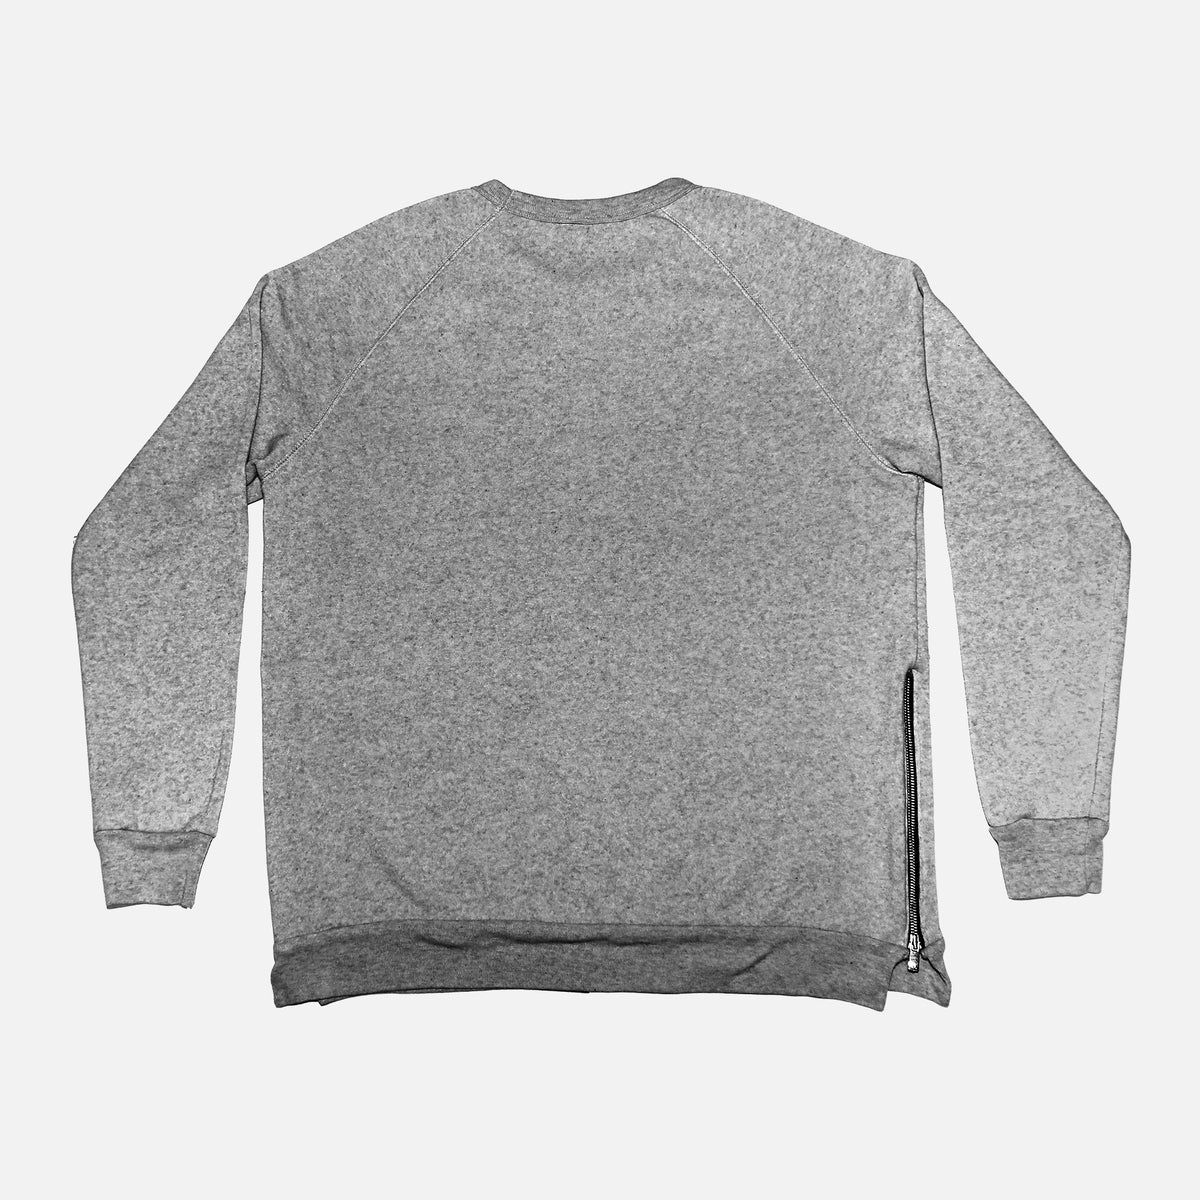 Tri-Blend Sweatshirt Grey - DEMEANOIR - 2